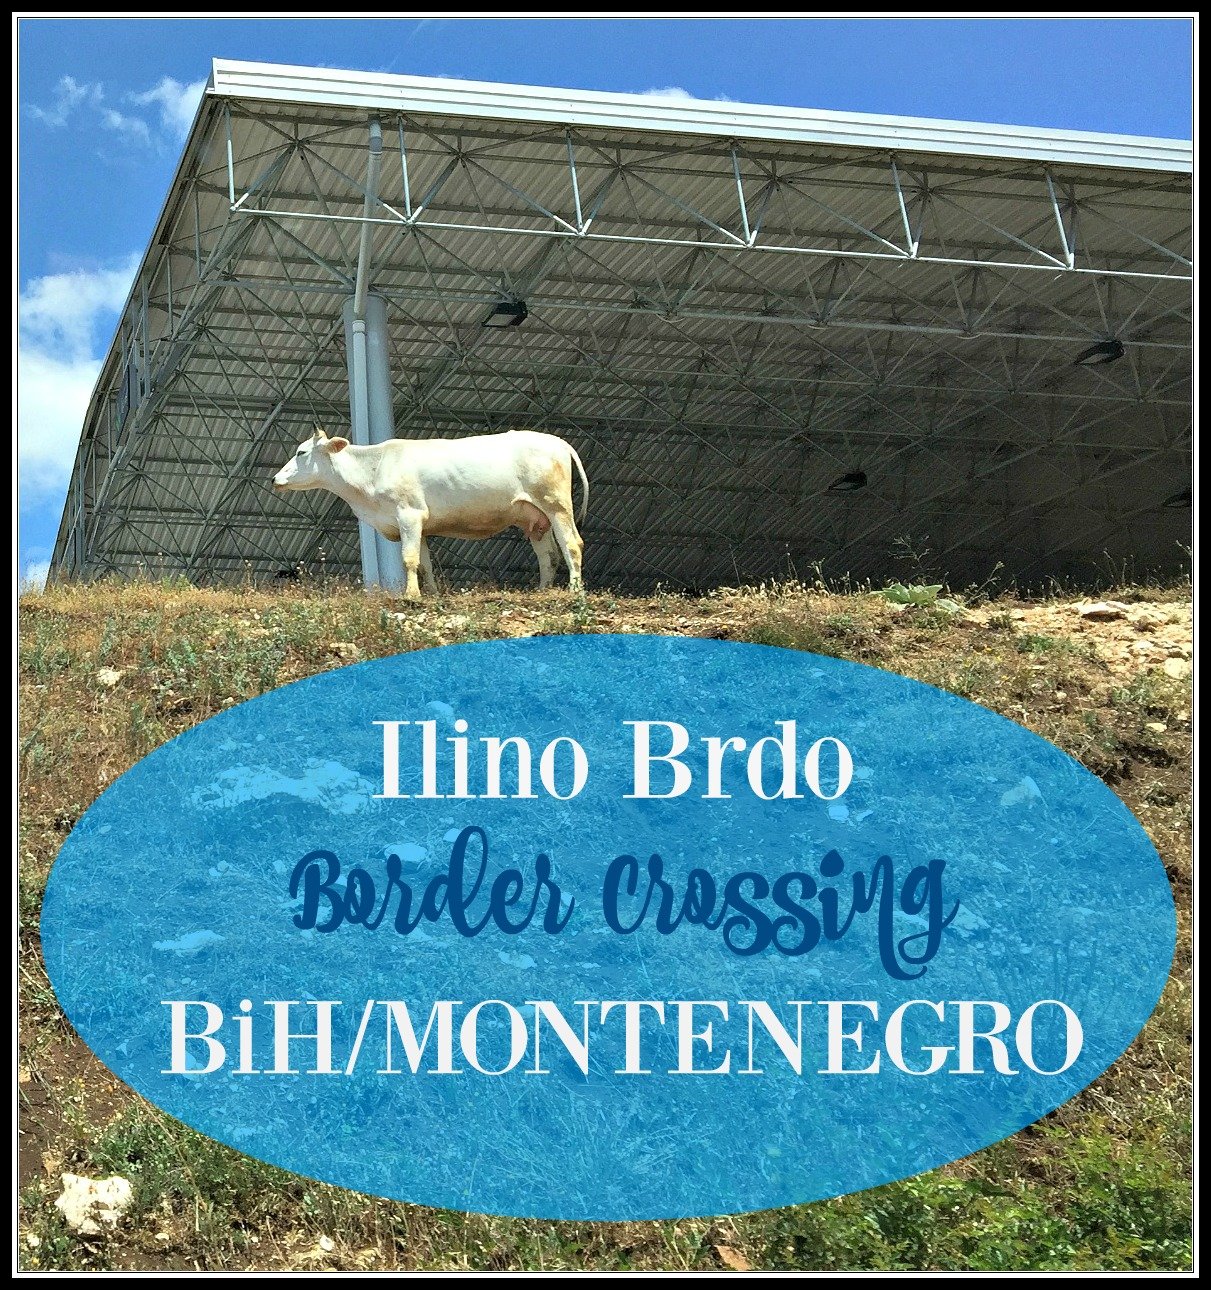 We saw this Border Cow at Ilino Brdo border post BiH/Montenegro on a road trip between Trebinje (BiH) and Kotor (Montenegro)